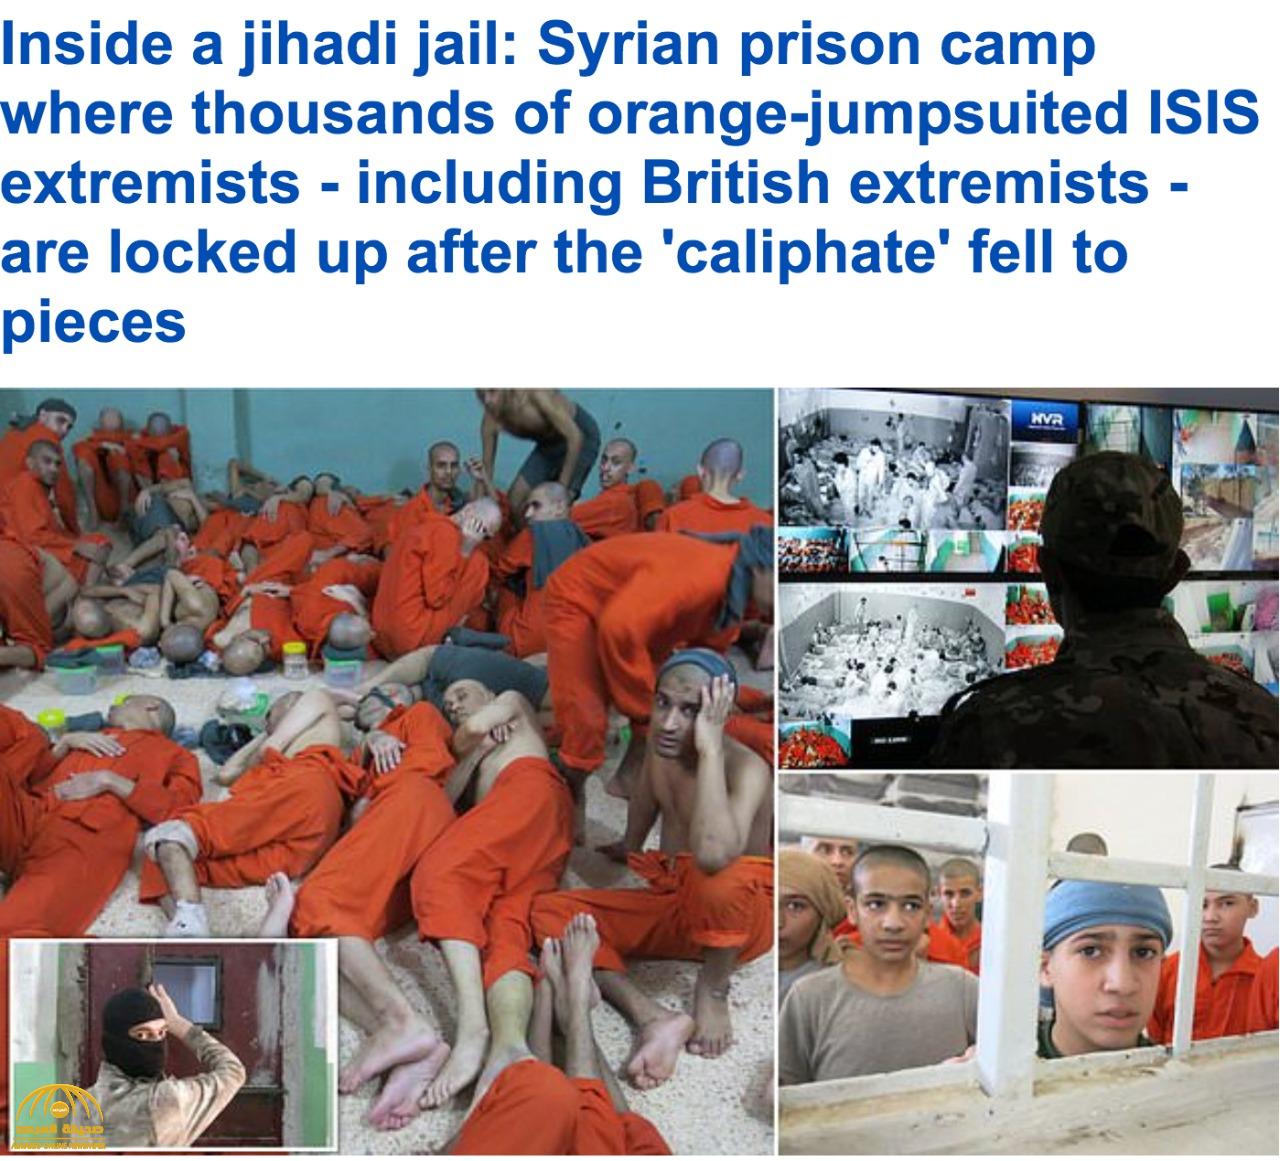 شاهد : صور وفيديو من داخل سجن سوري لأكثر من 5 آلاف داعشي